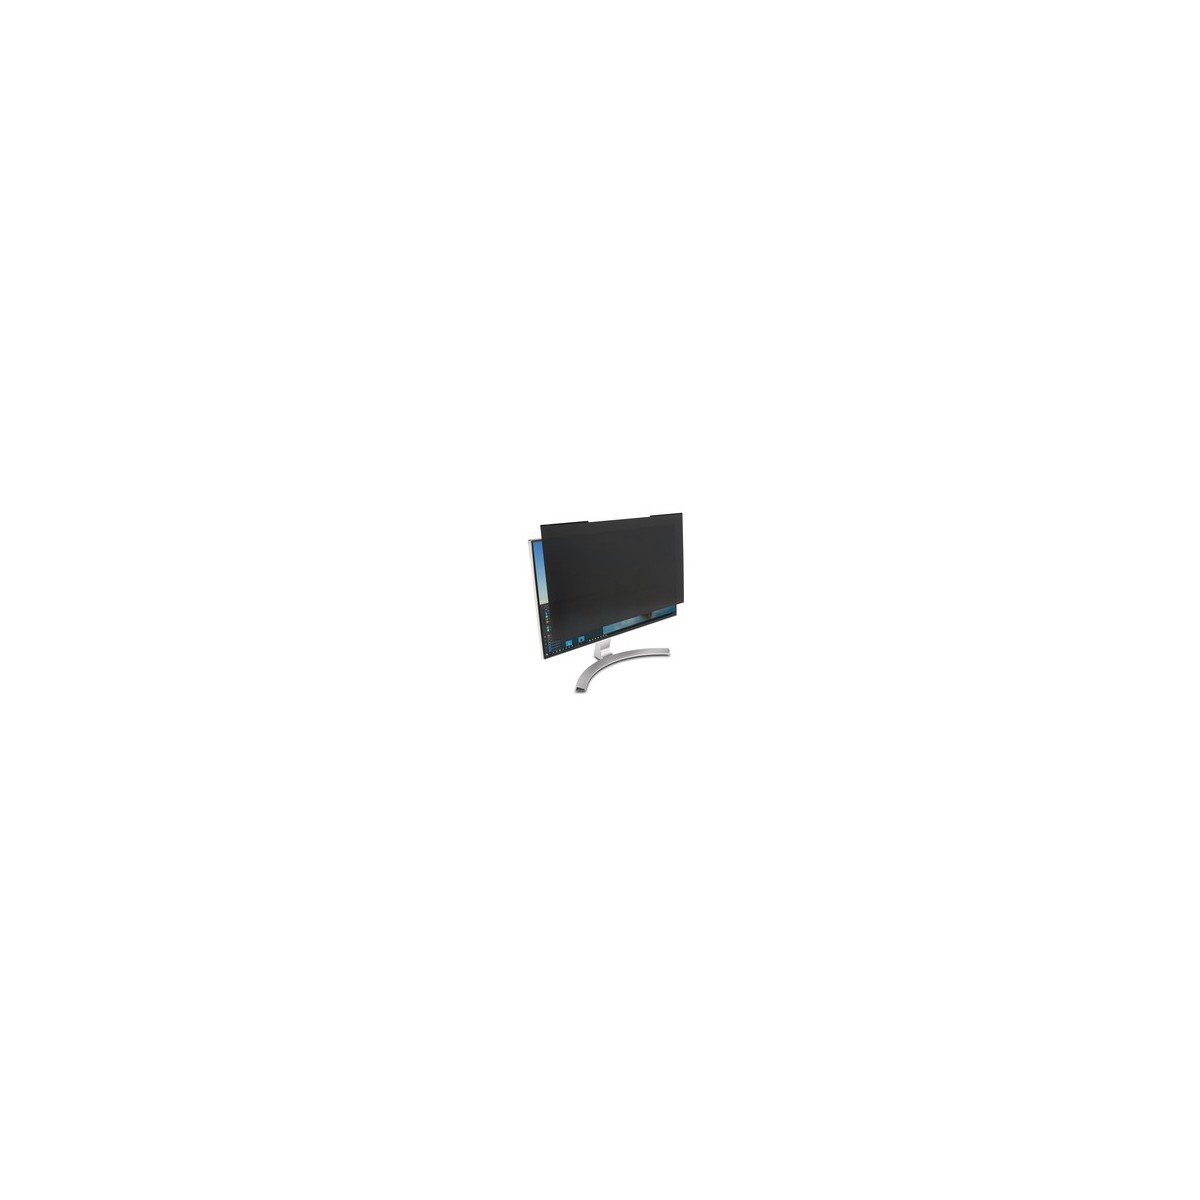 Kensington MagPro™ Magnetic Privacy Screen Filter for Monitors 24” (16:9) - 61 cm (24) - 16:9 - Monitor - Frameless display priv